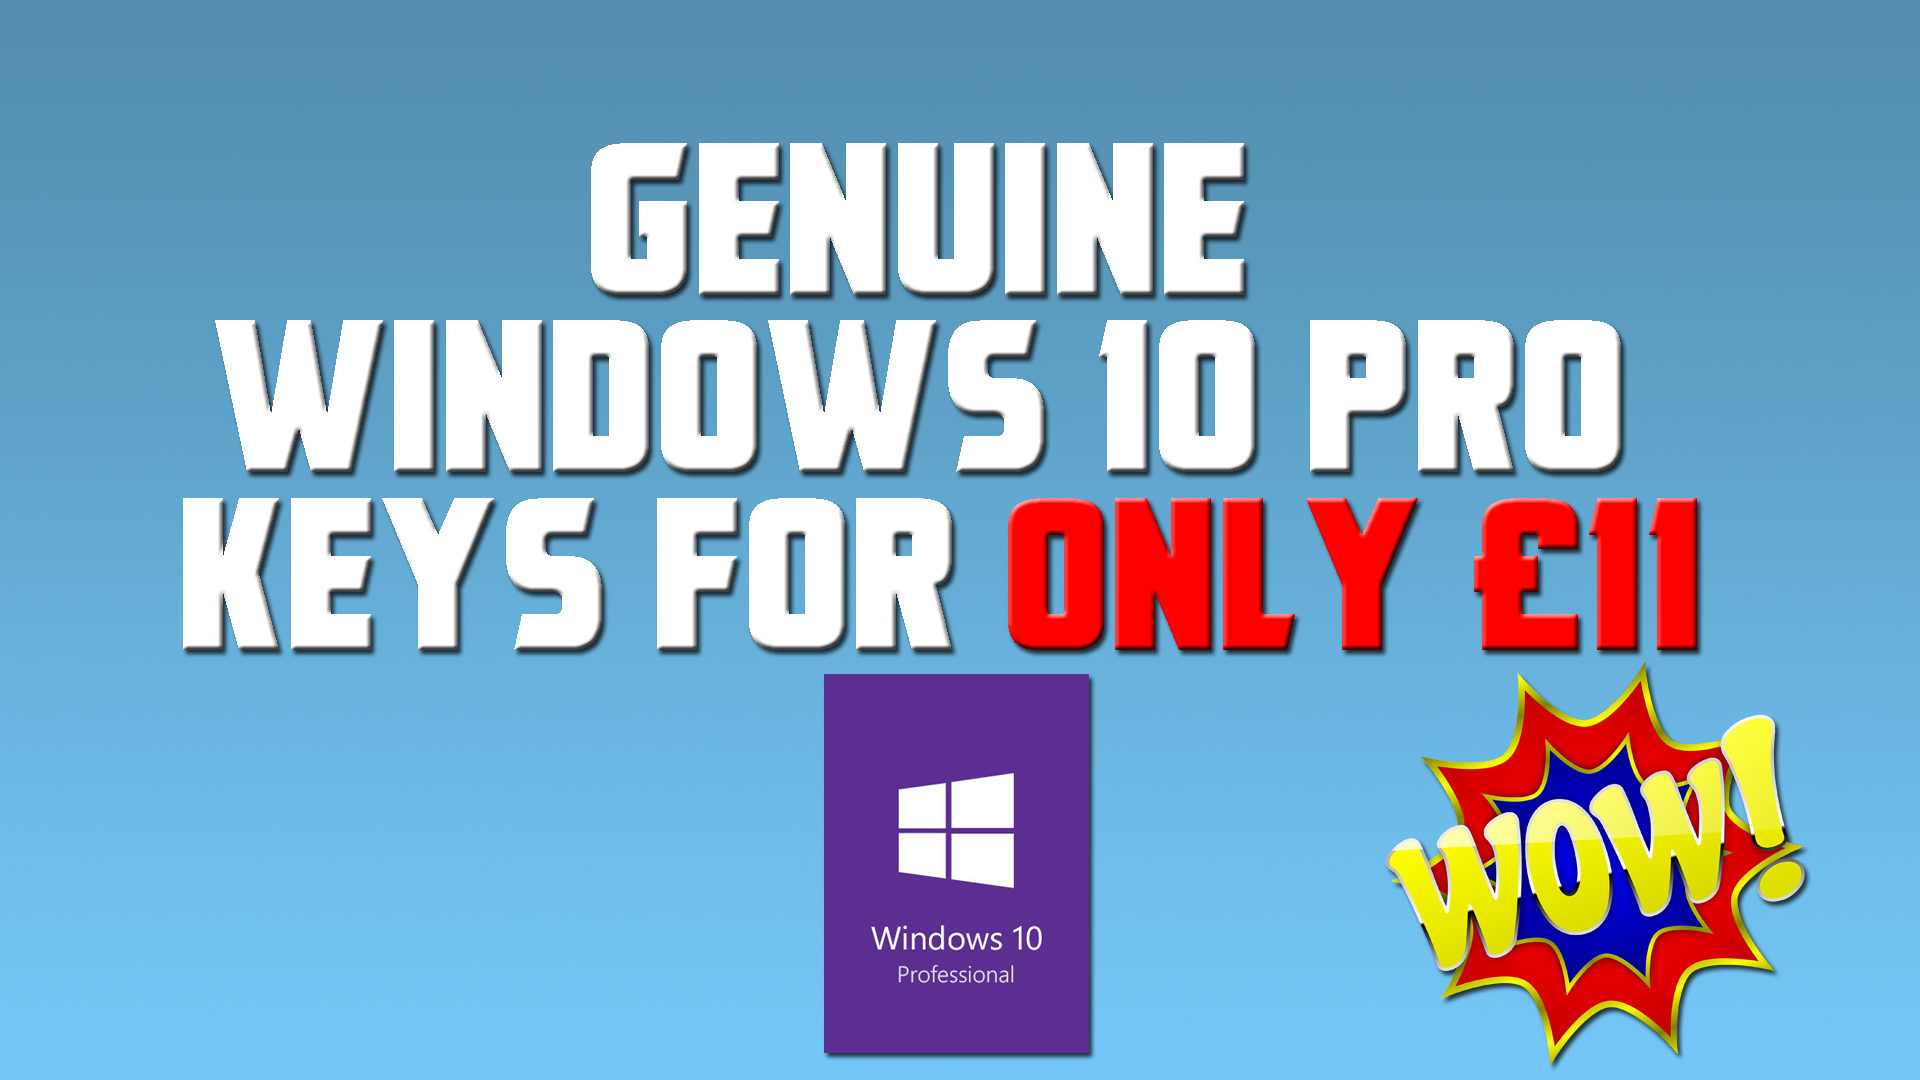 buy windows 10 pro key